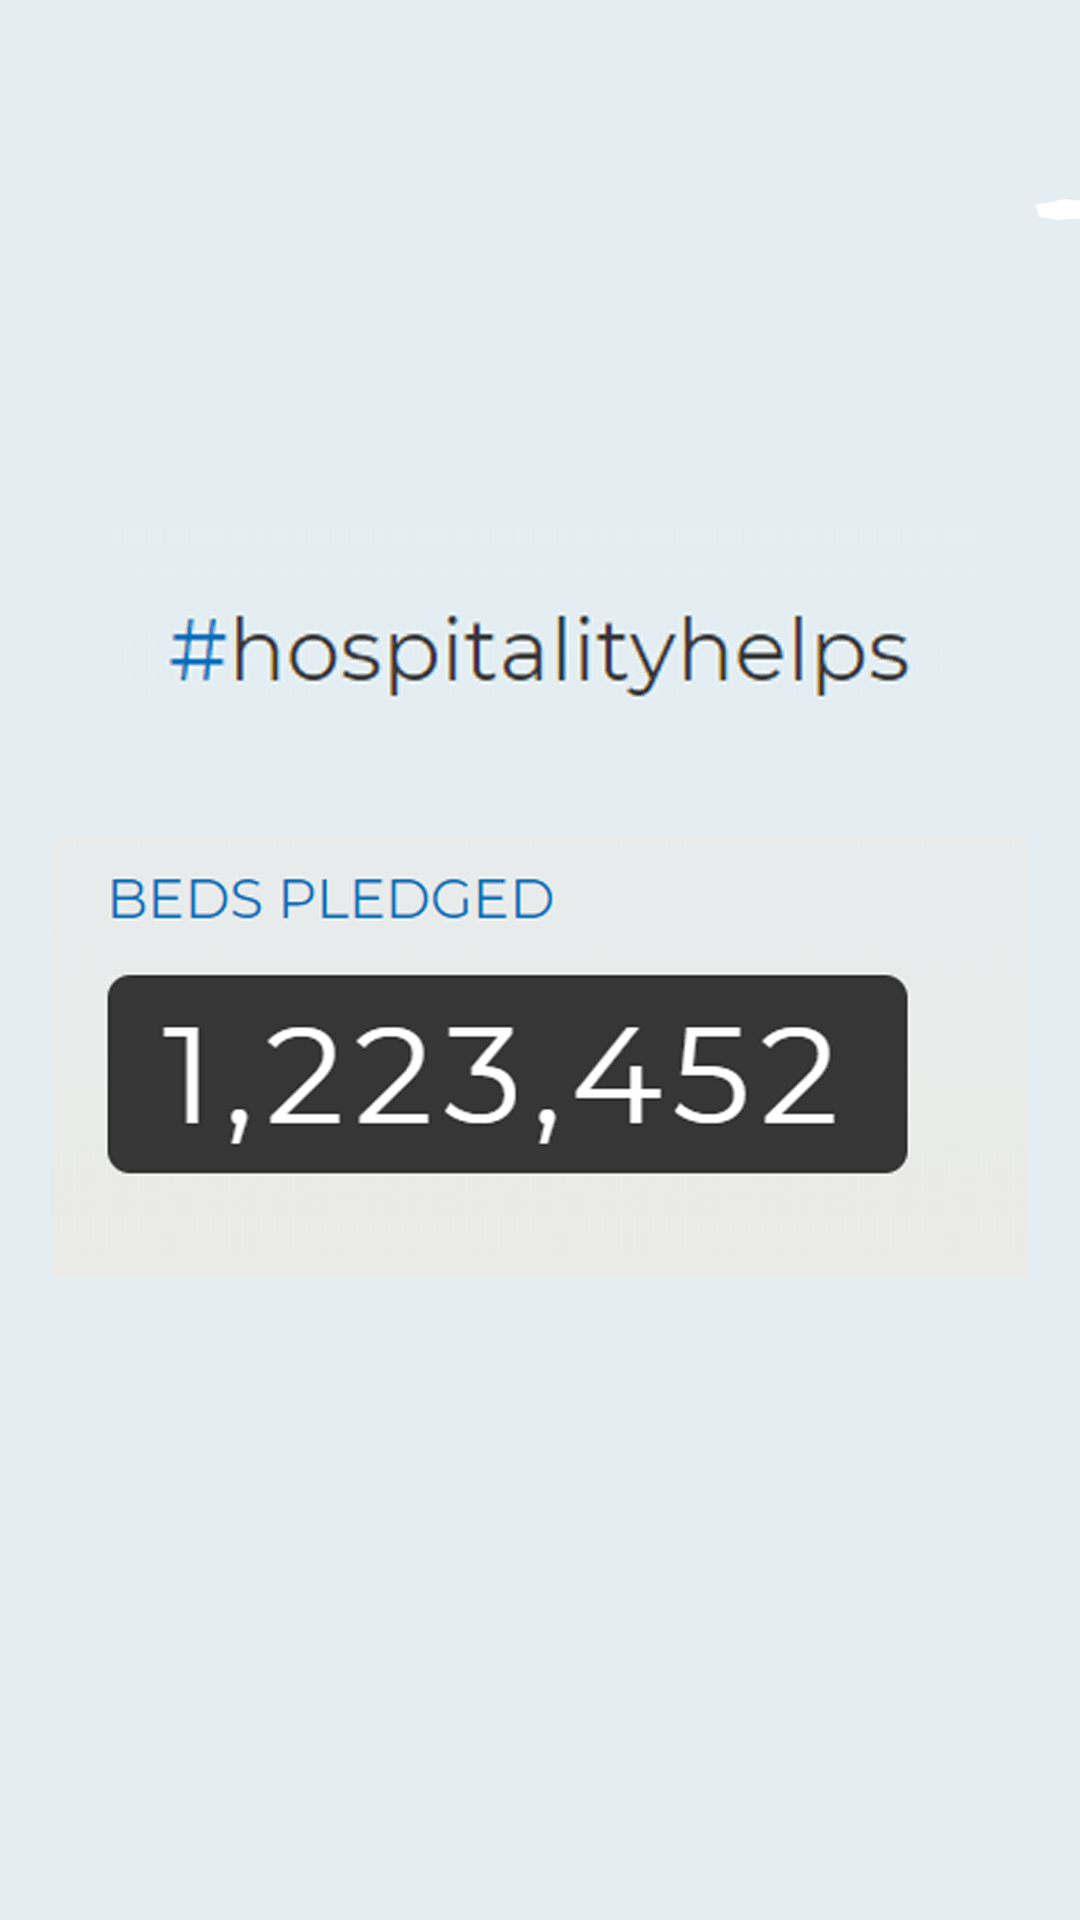 FI_hospitalityhelpsorg-beds-pledged